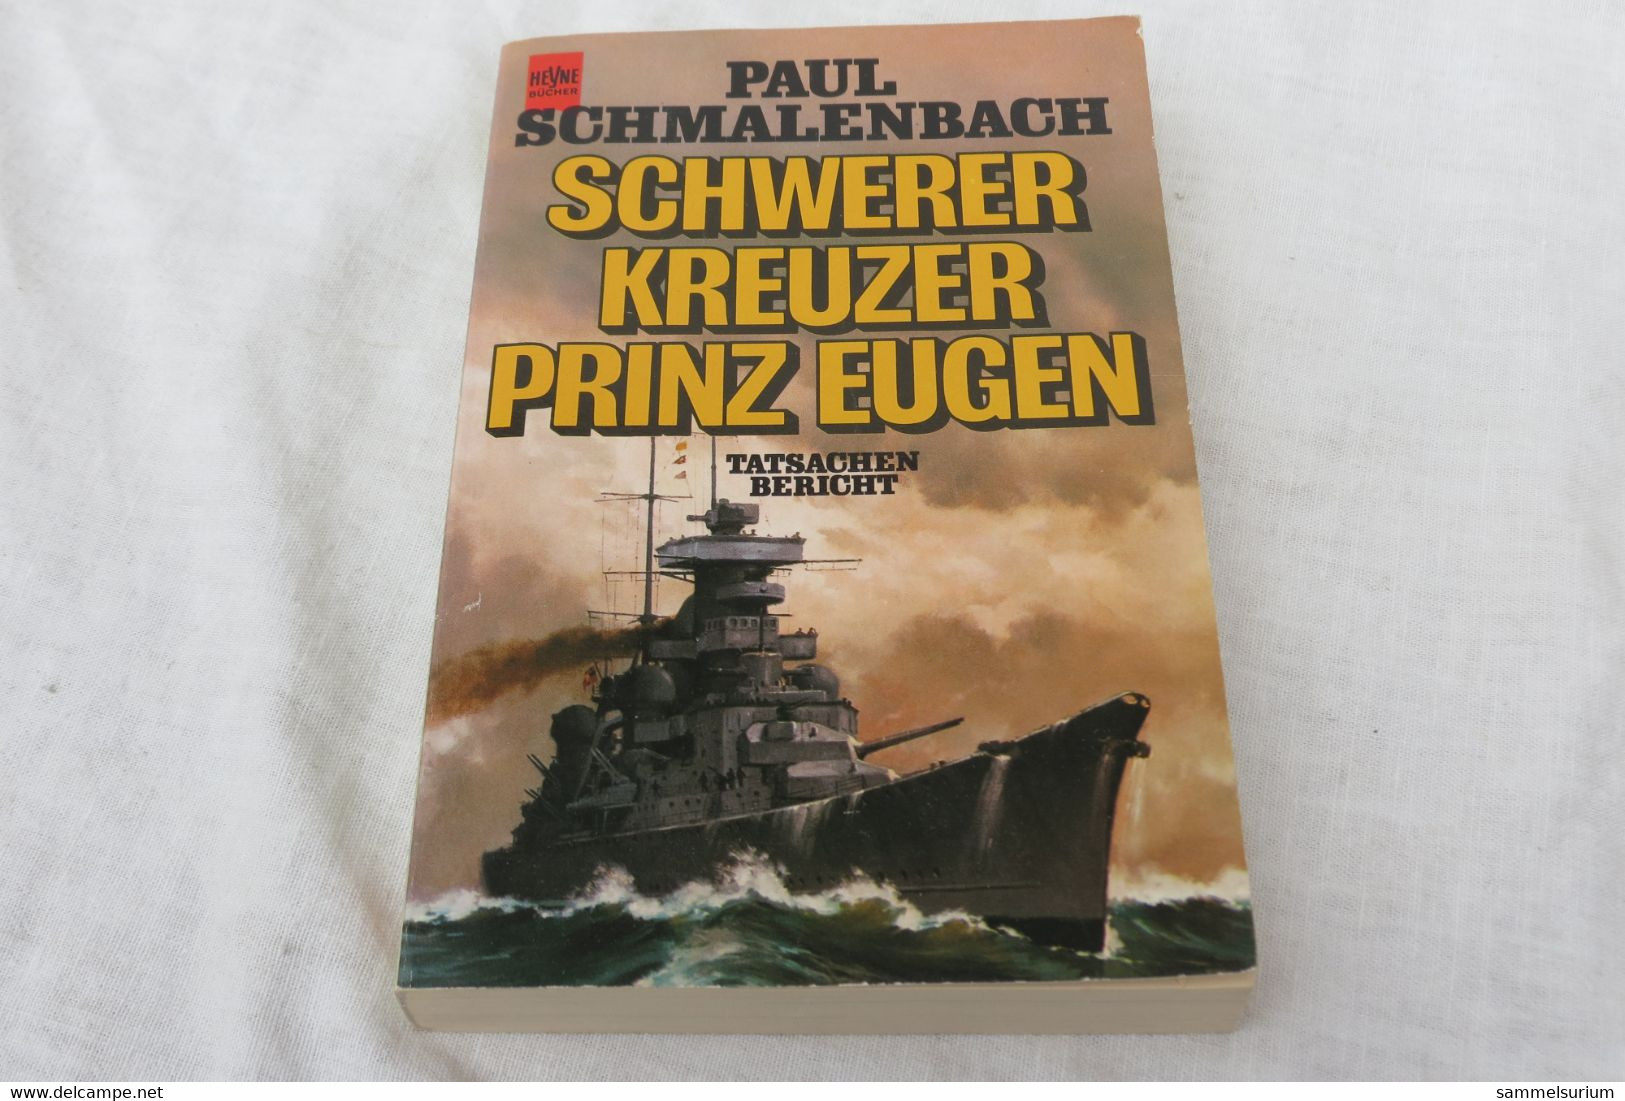 Paul Schmalenbach "Schwerer Kreuzer Prinz Eugen" Tatsachenbericht - Polizie & Militari